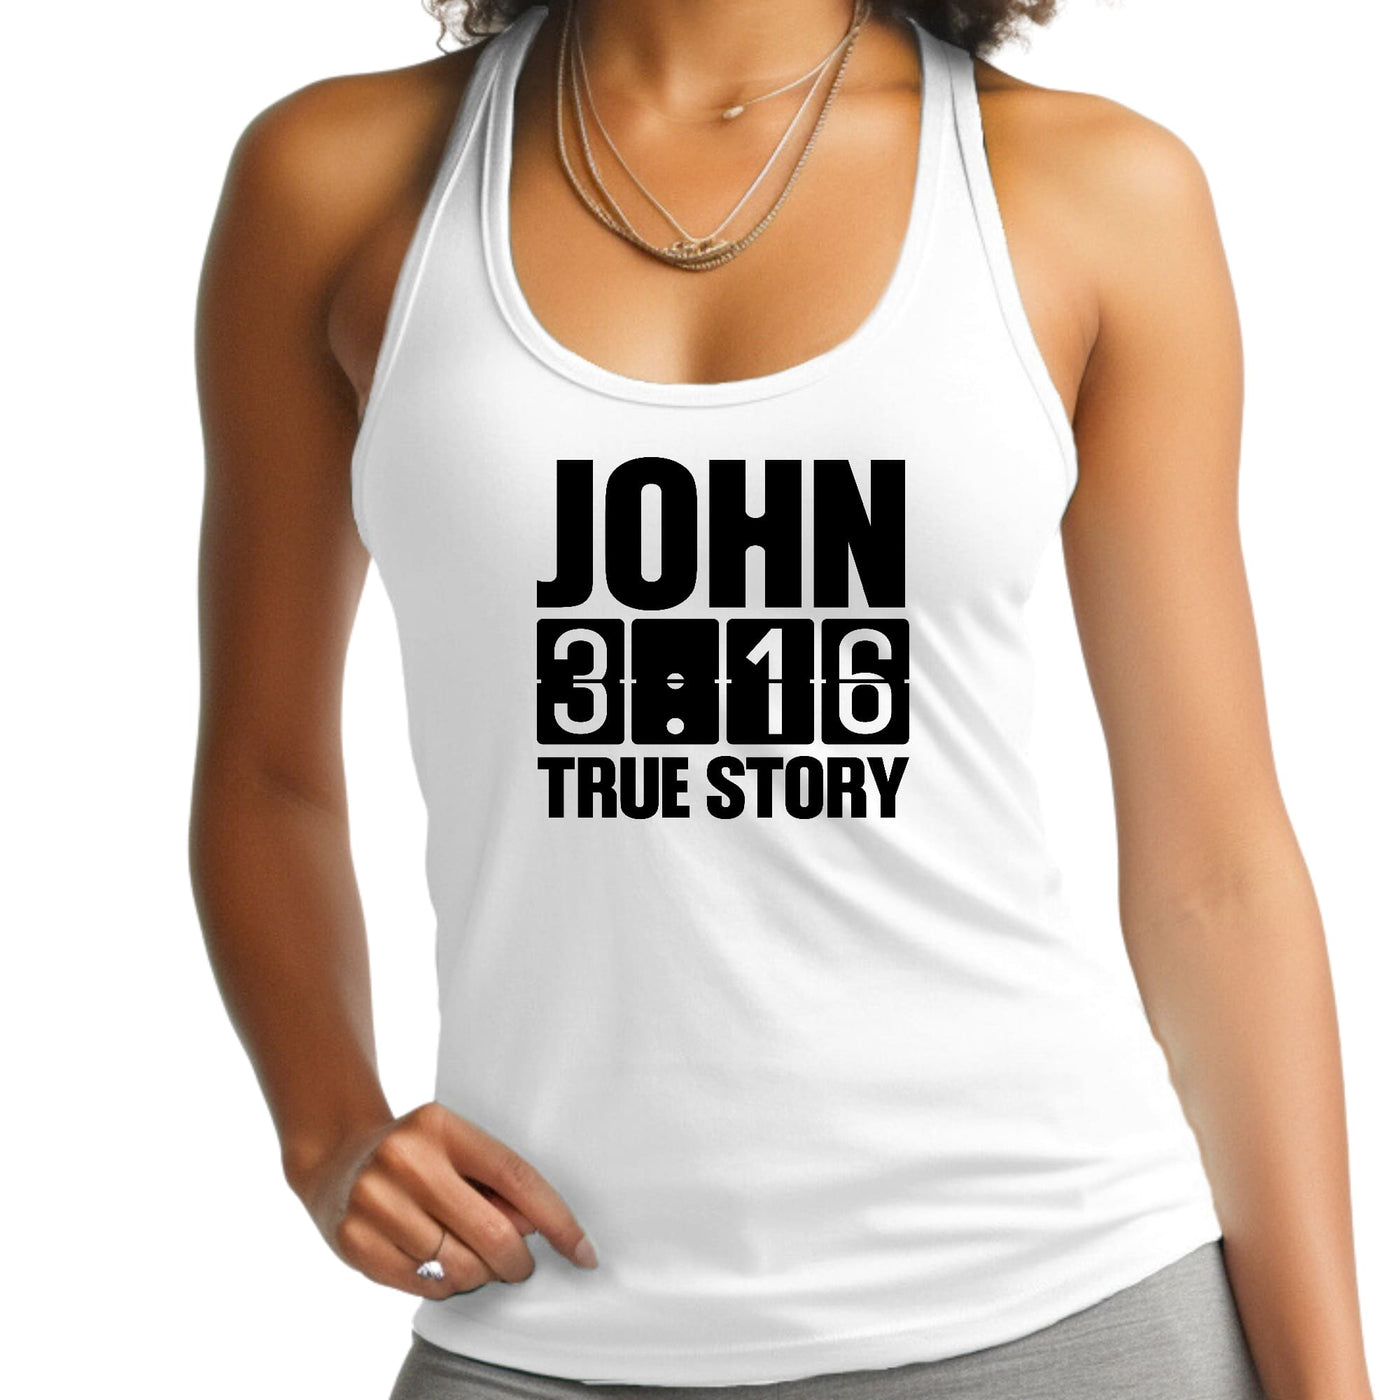 Womens Tank Top Fitness T - shirt John 3:16 True Story Print - Tops